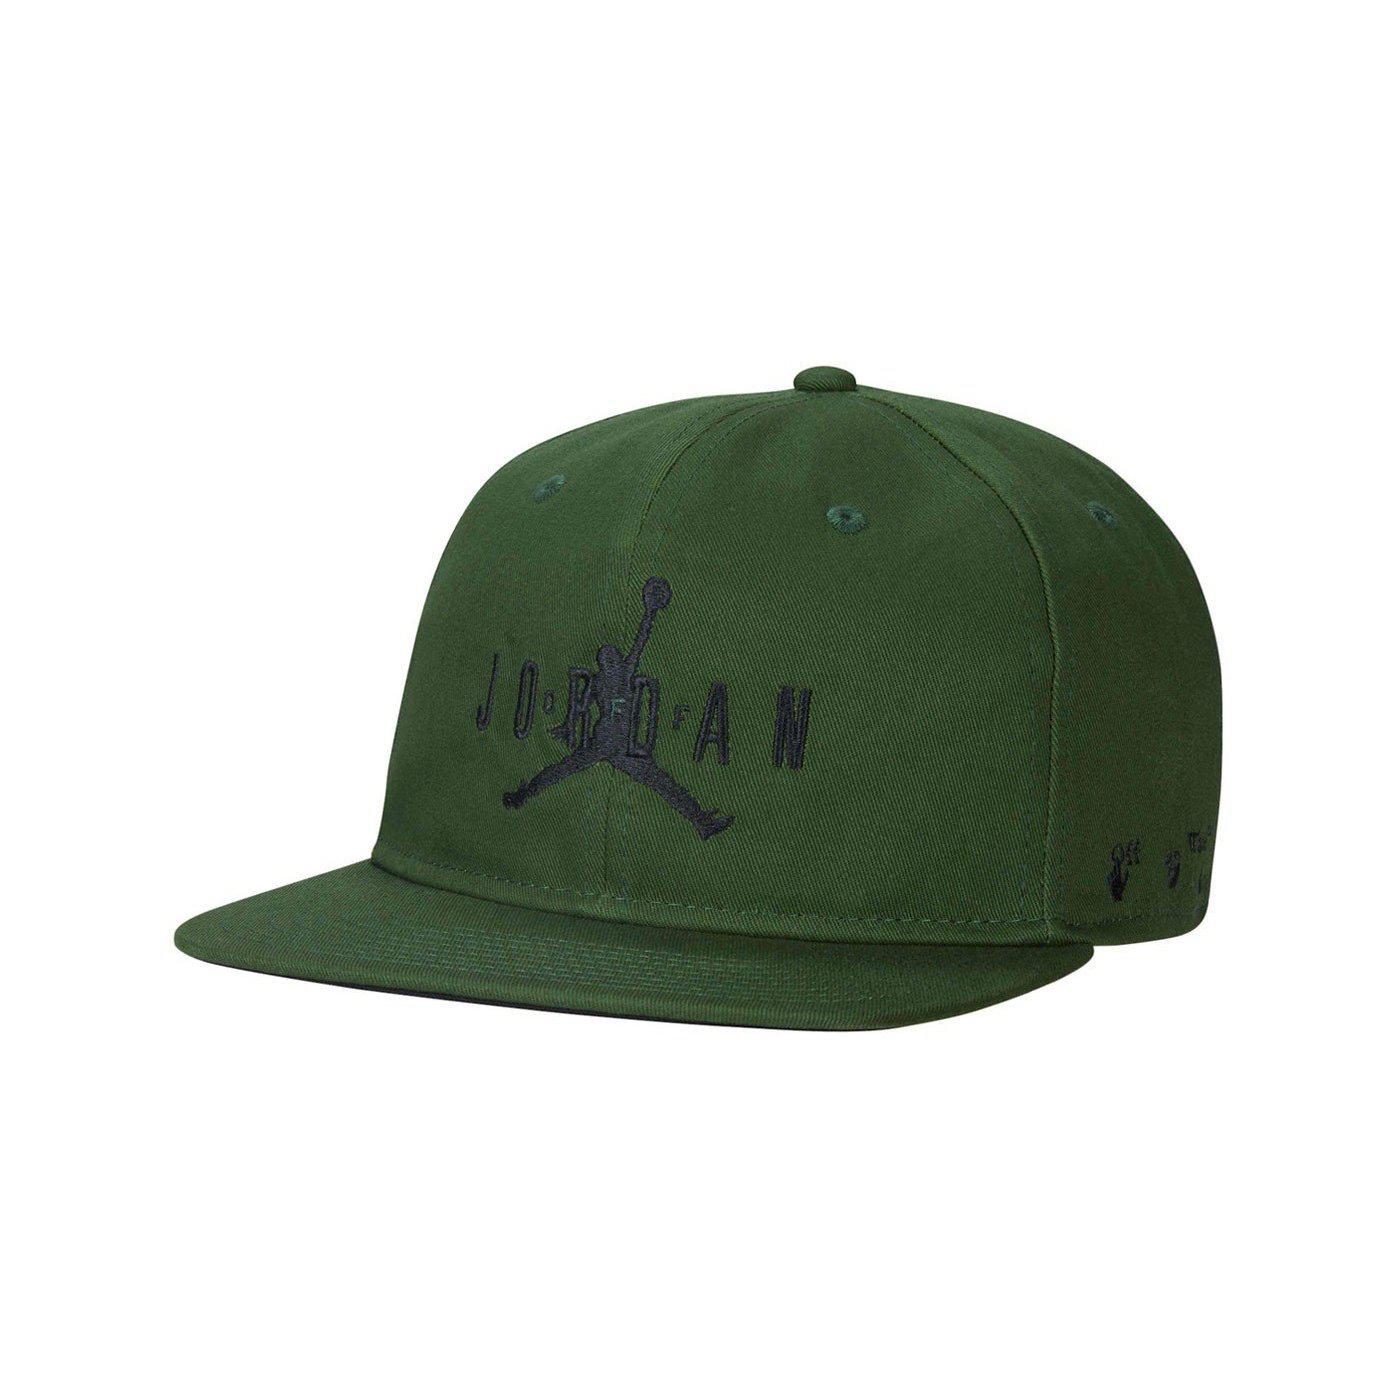 Off White x Jordan Hat Green